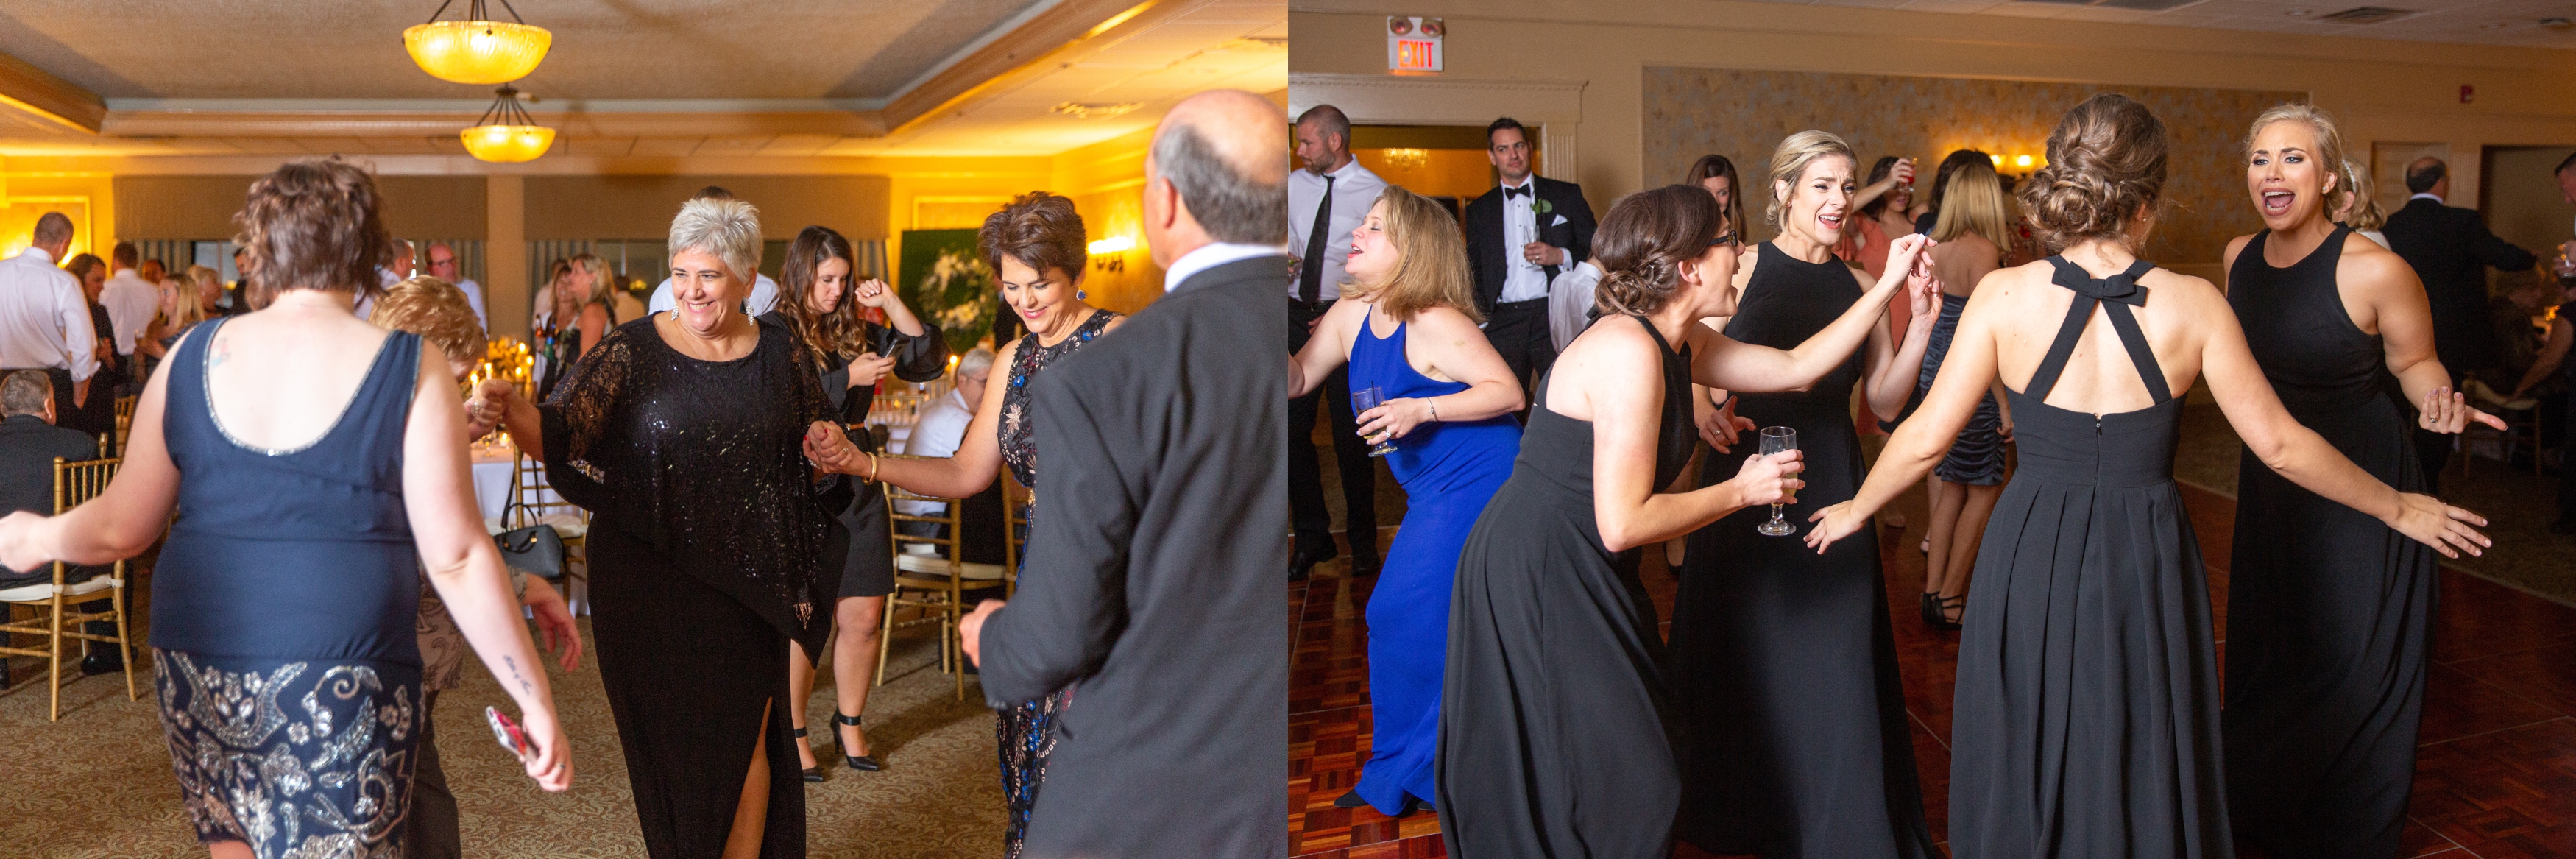 Dancing Pictures at a Cincinnati Wedding Reception